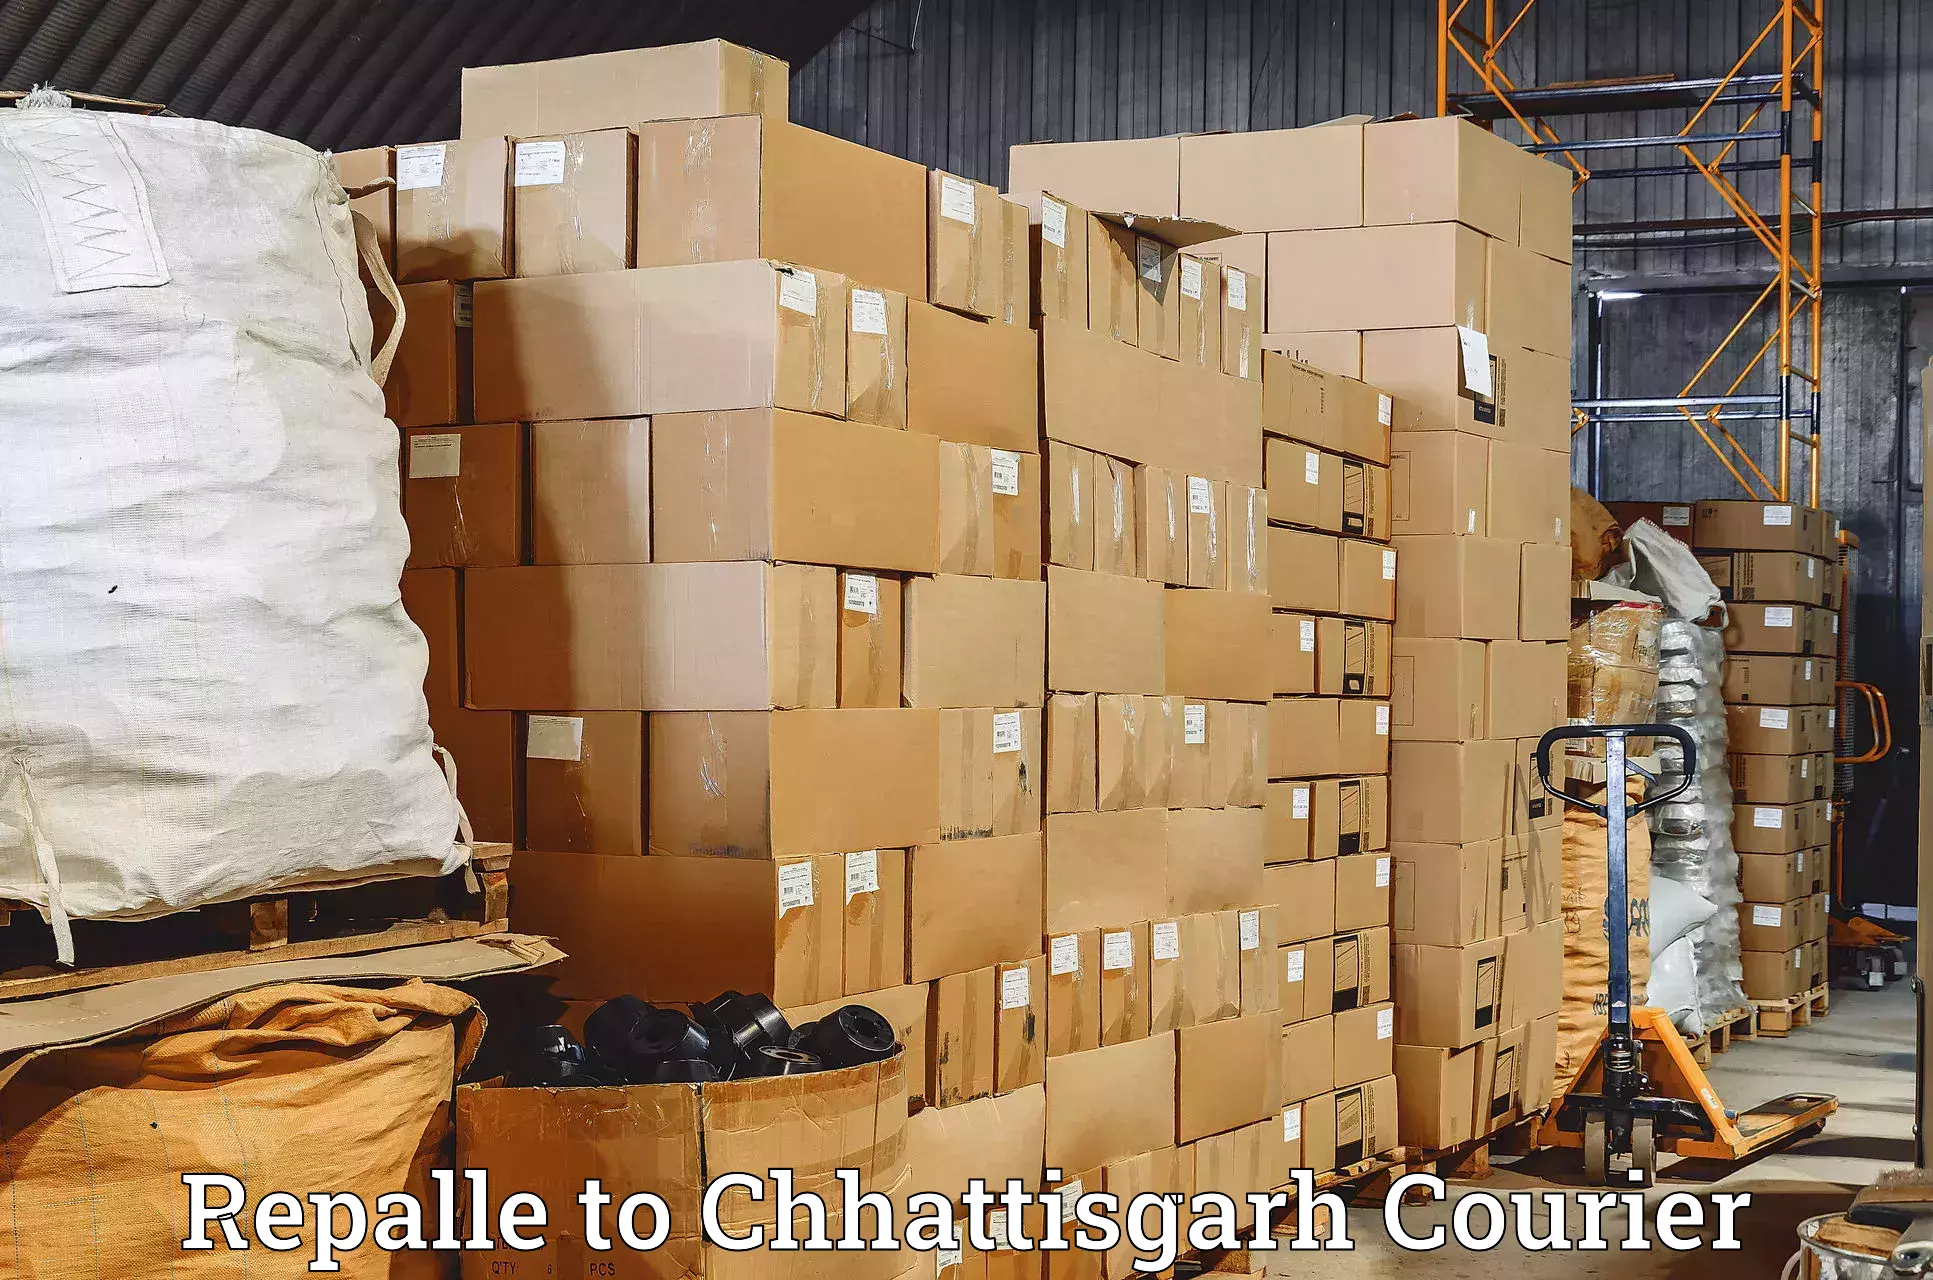 Easy access courier services Repalle to Chhattisgarh